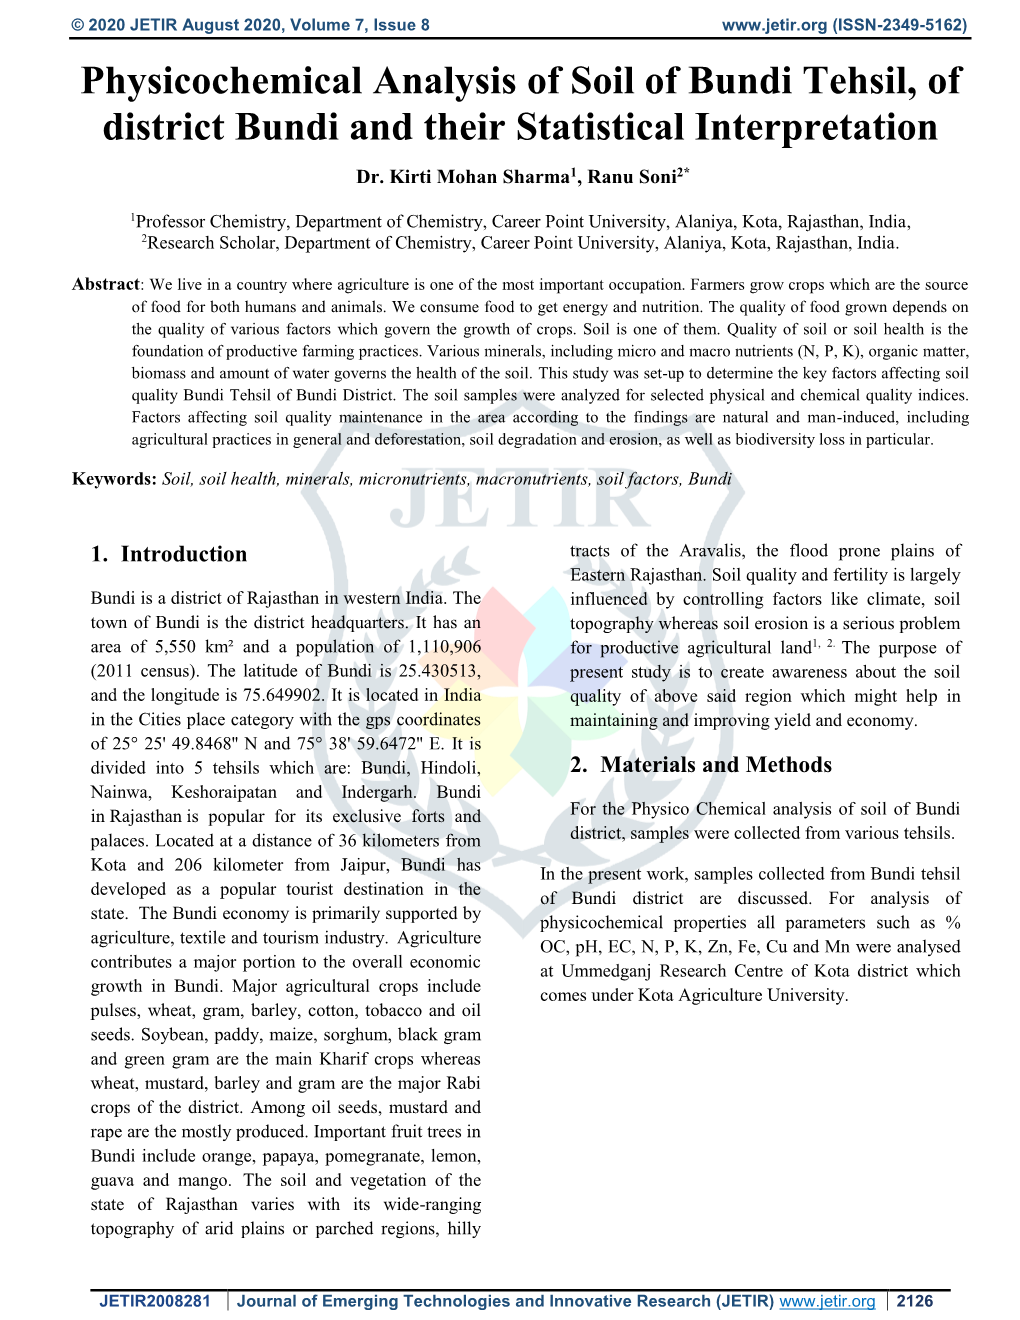 Physicochemical Analysis of Soil of Bundi Tehsil, of District Bundi and Their Statistical Interpretation Dr